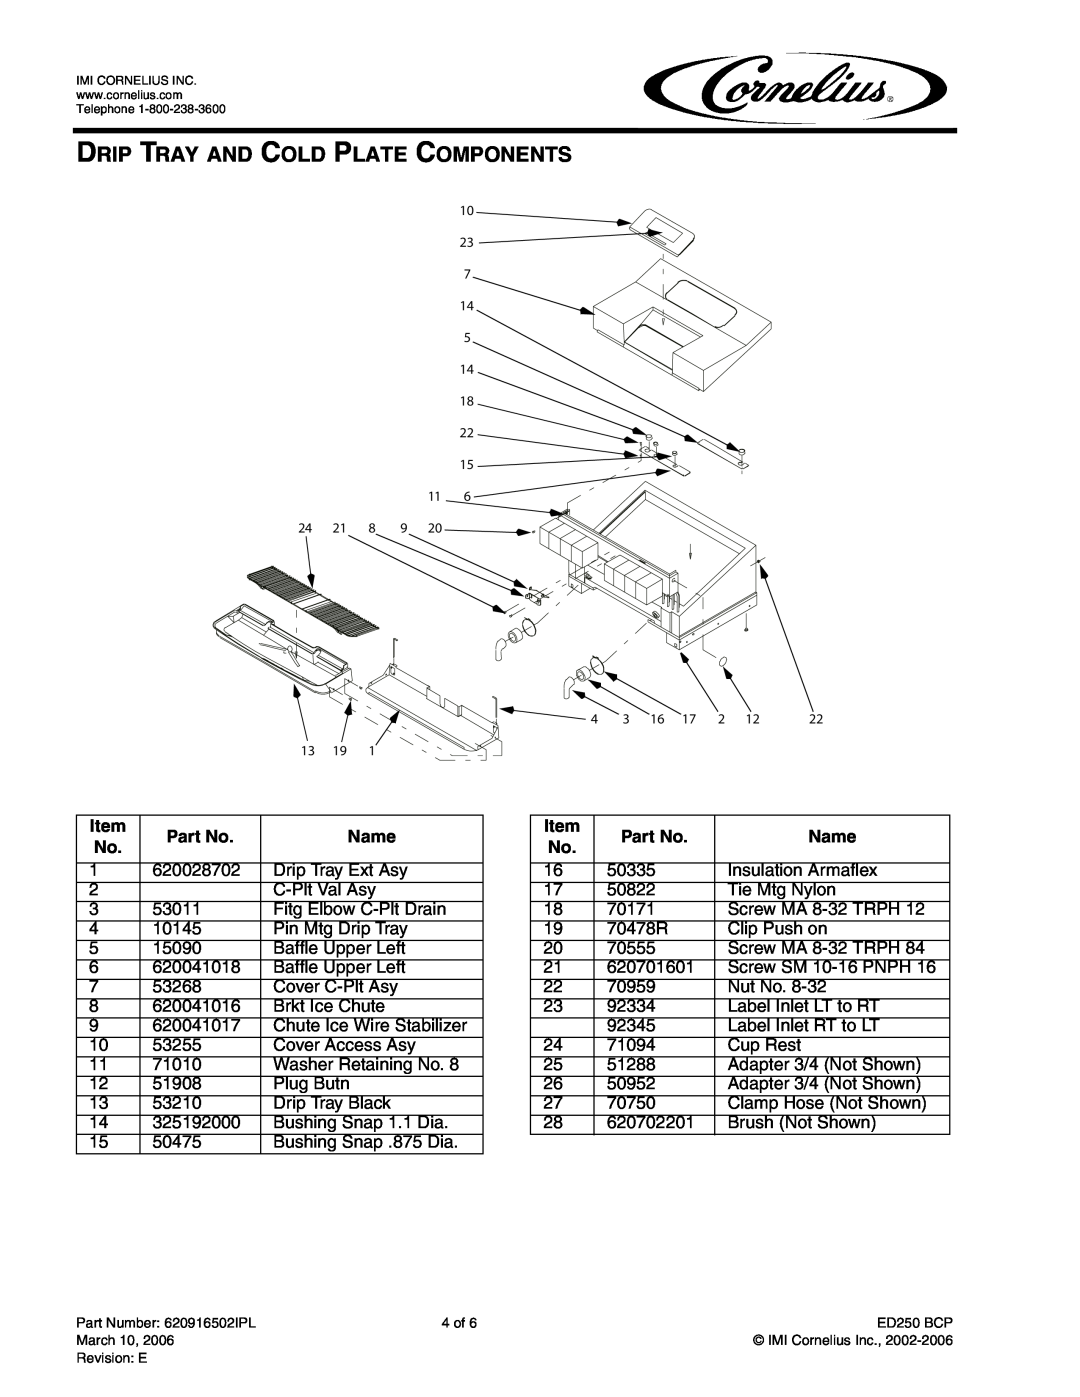 Panasonic ED250 BCP manual Drip Tray And Cold Plate Components, Name, Imi Cornelius Inc, Telephone 